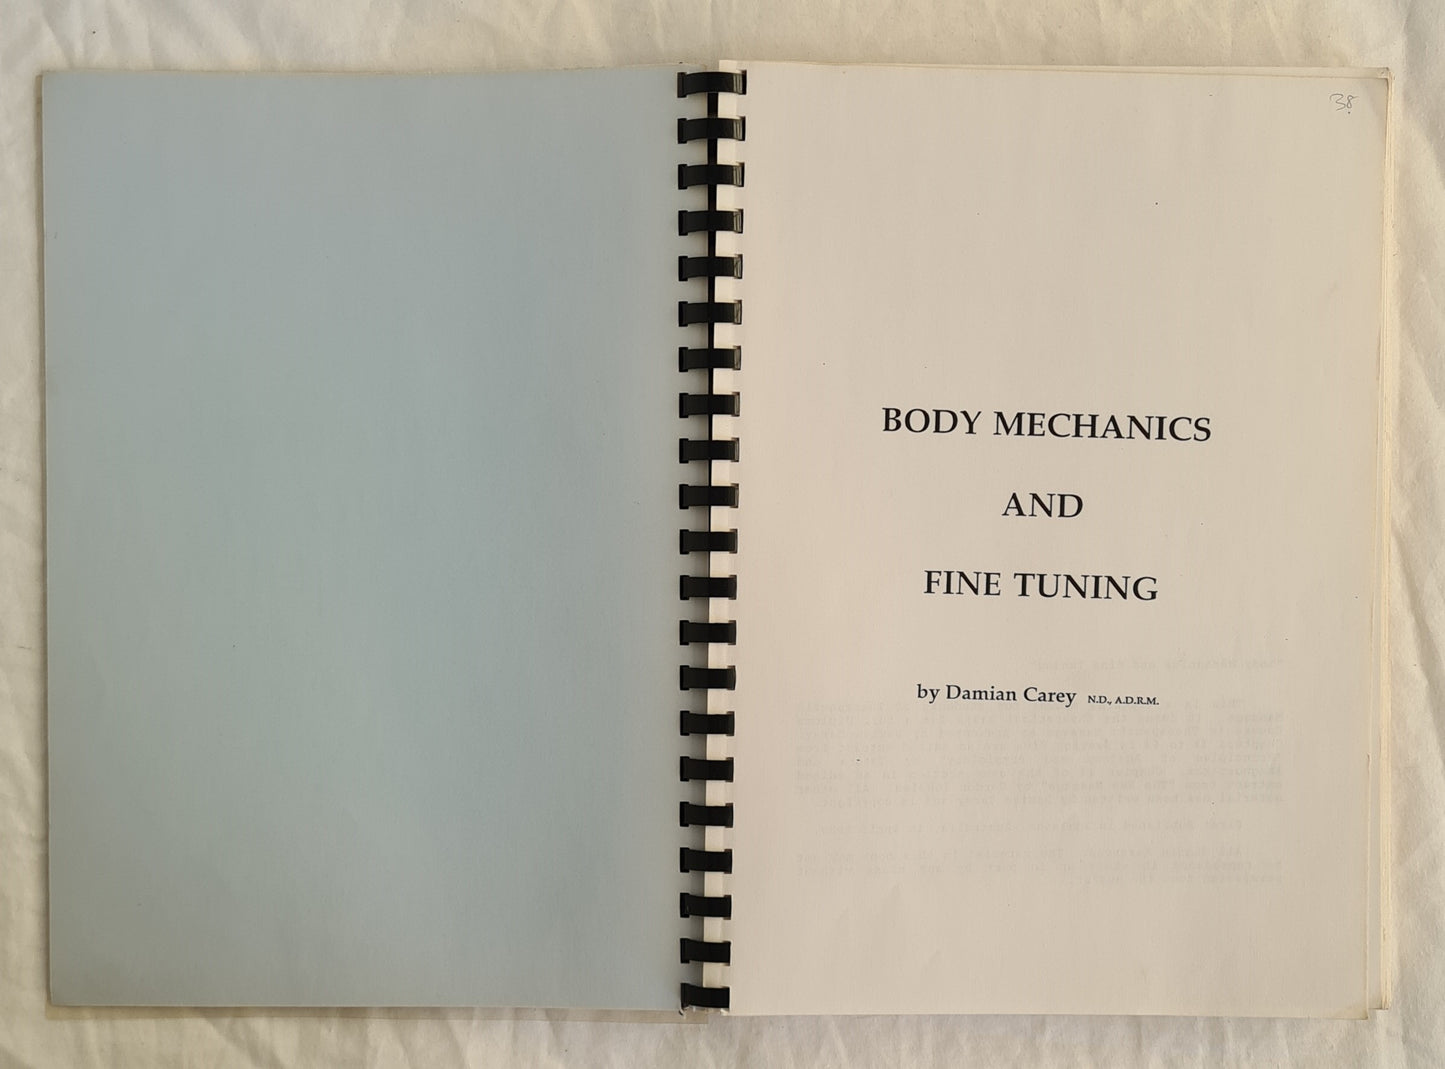 Body Mechanics and Fine Tuning by Damian Carey